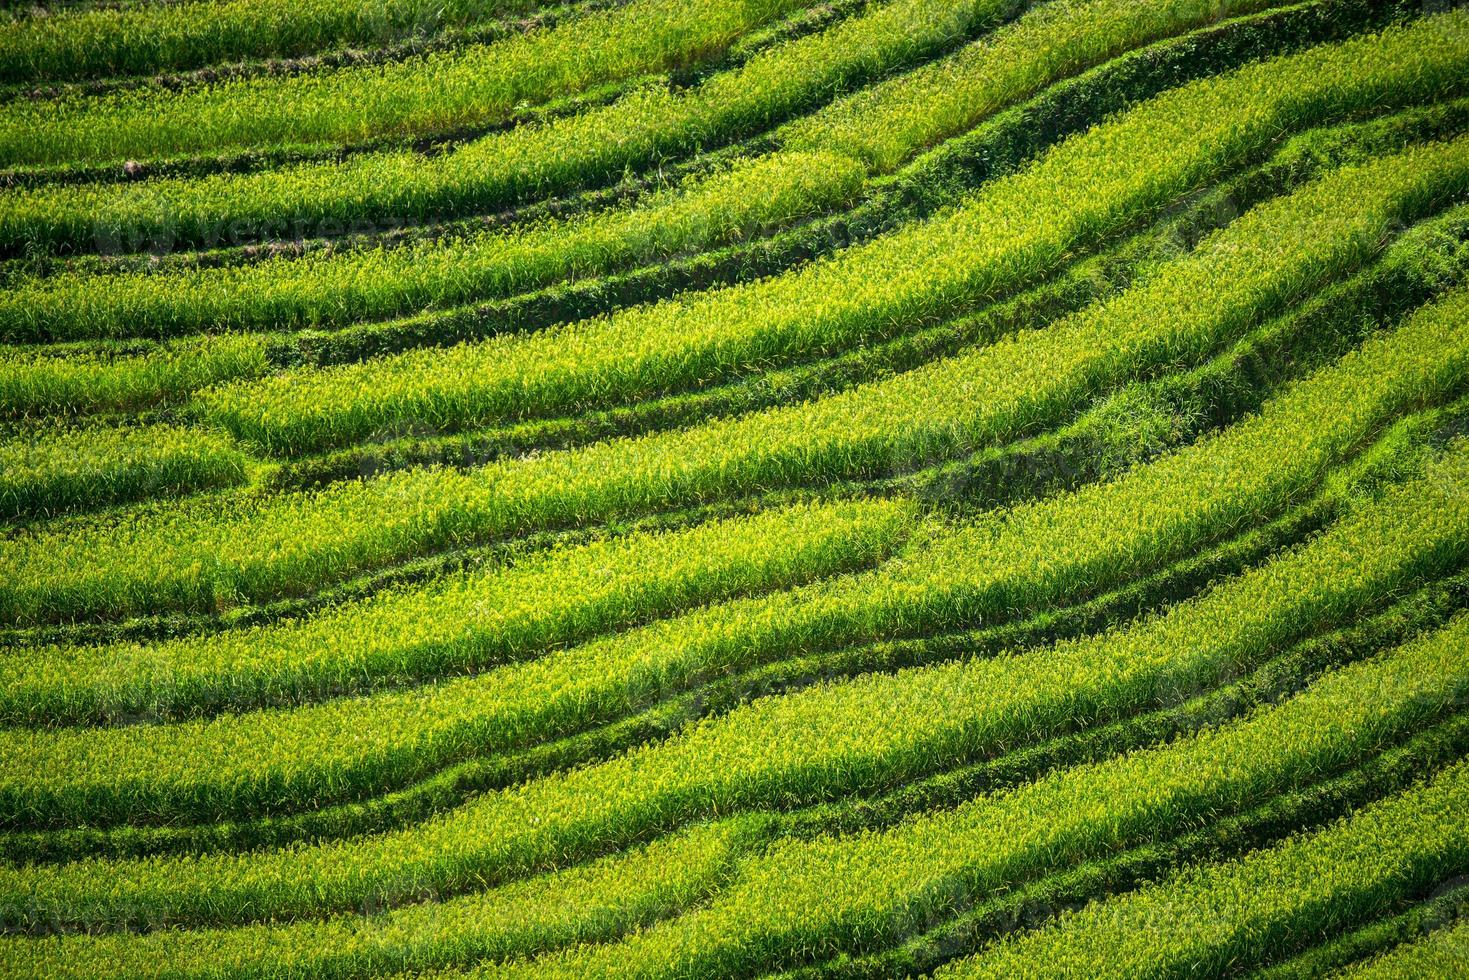 terraza de arroz en vietnam foto